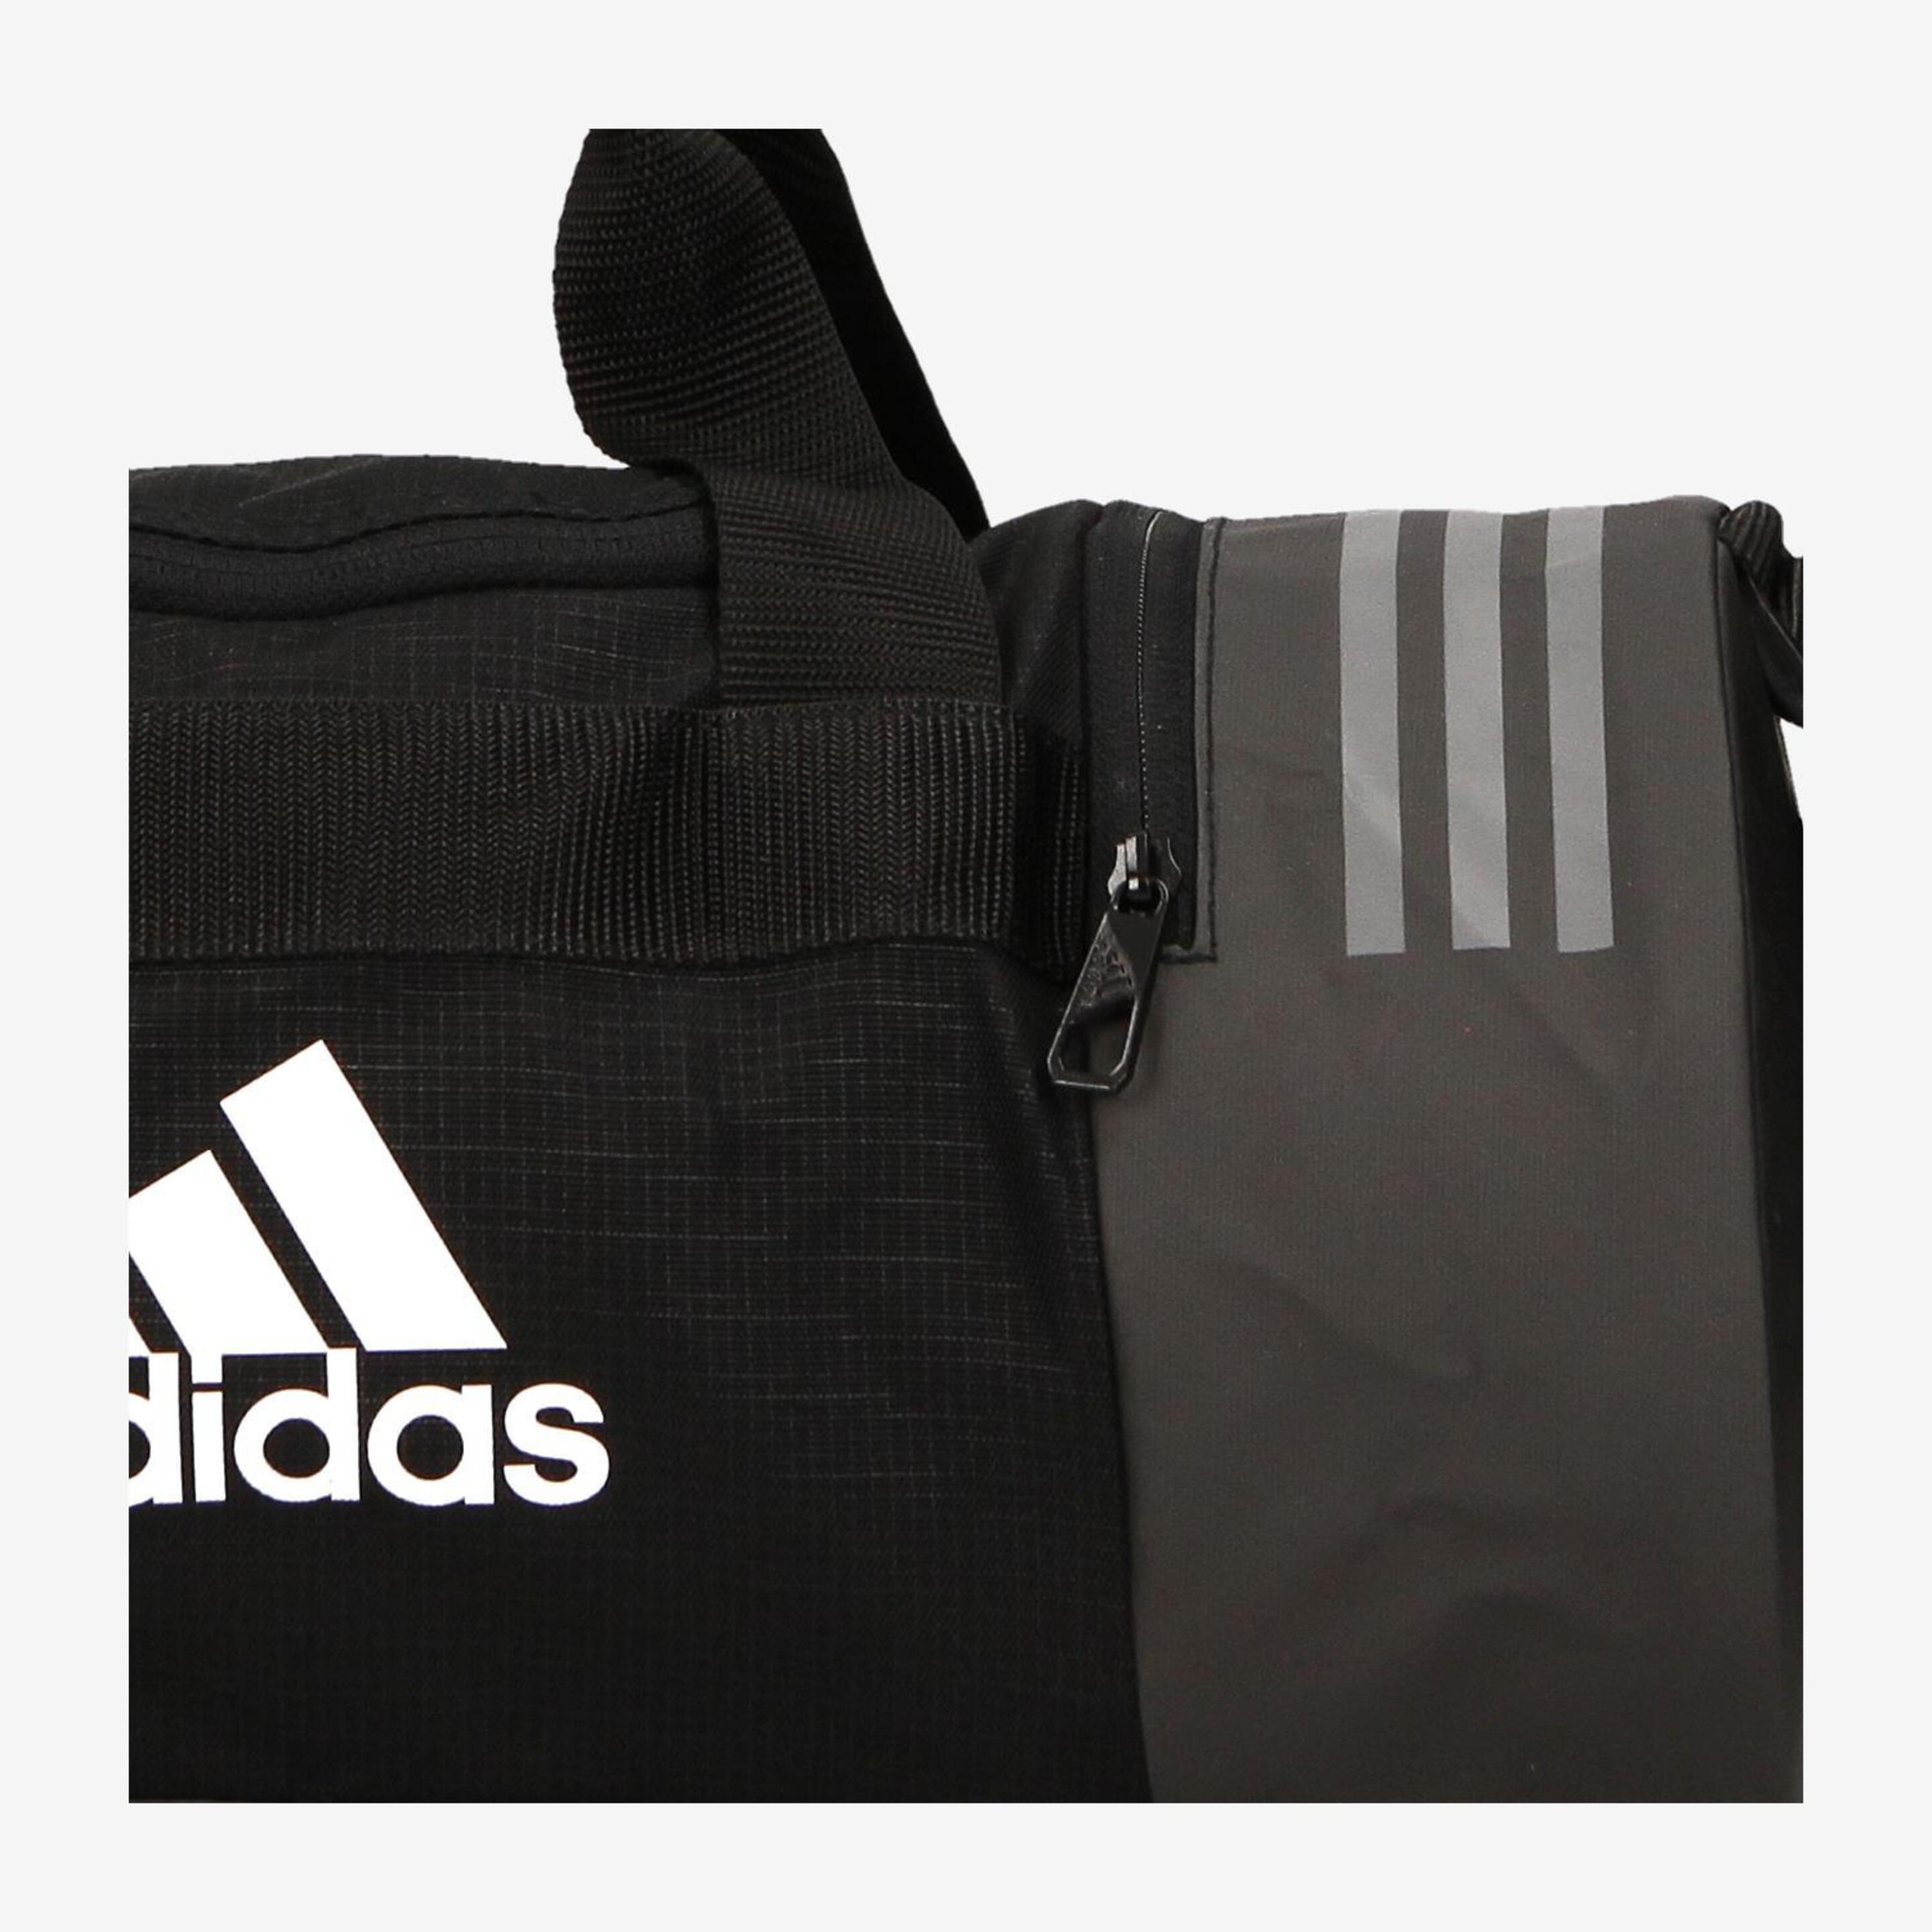 adidas New Training Core Teambag